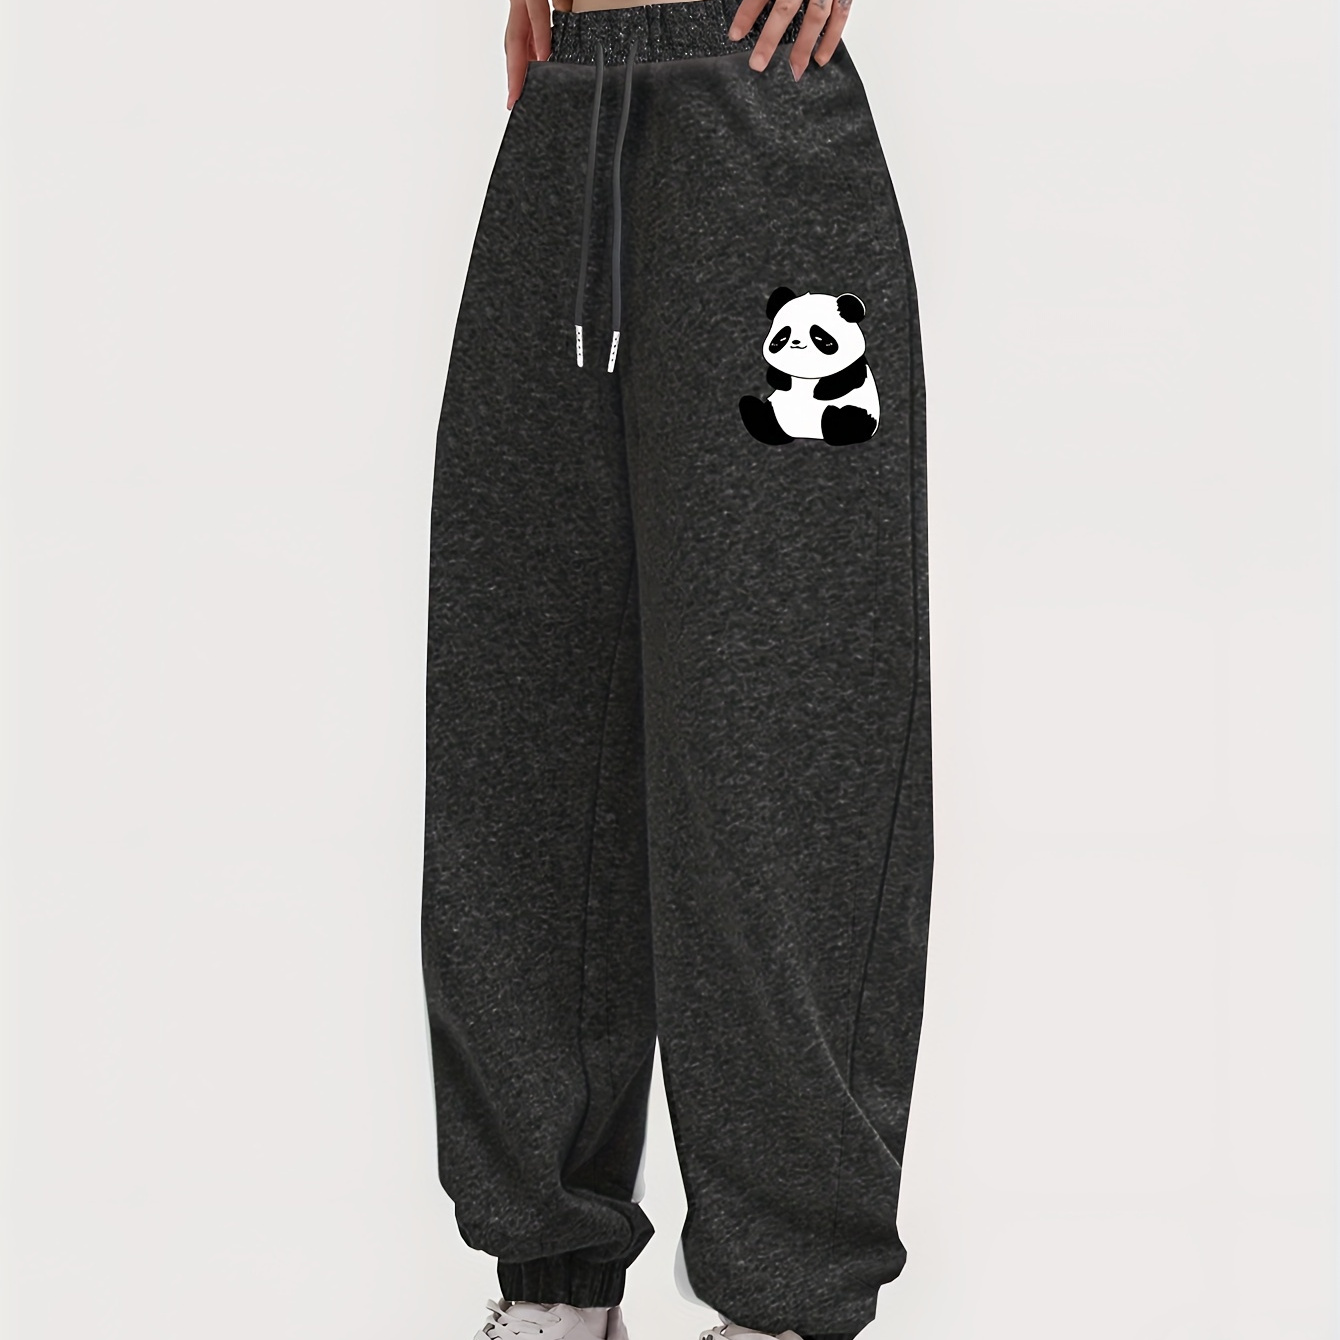 

Panda Print Casual Sports Pants, Drawstring Elastic Waist Slant Pockets Jogger Sweatpants, Women's Clothing